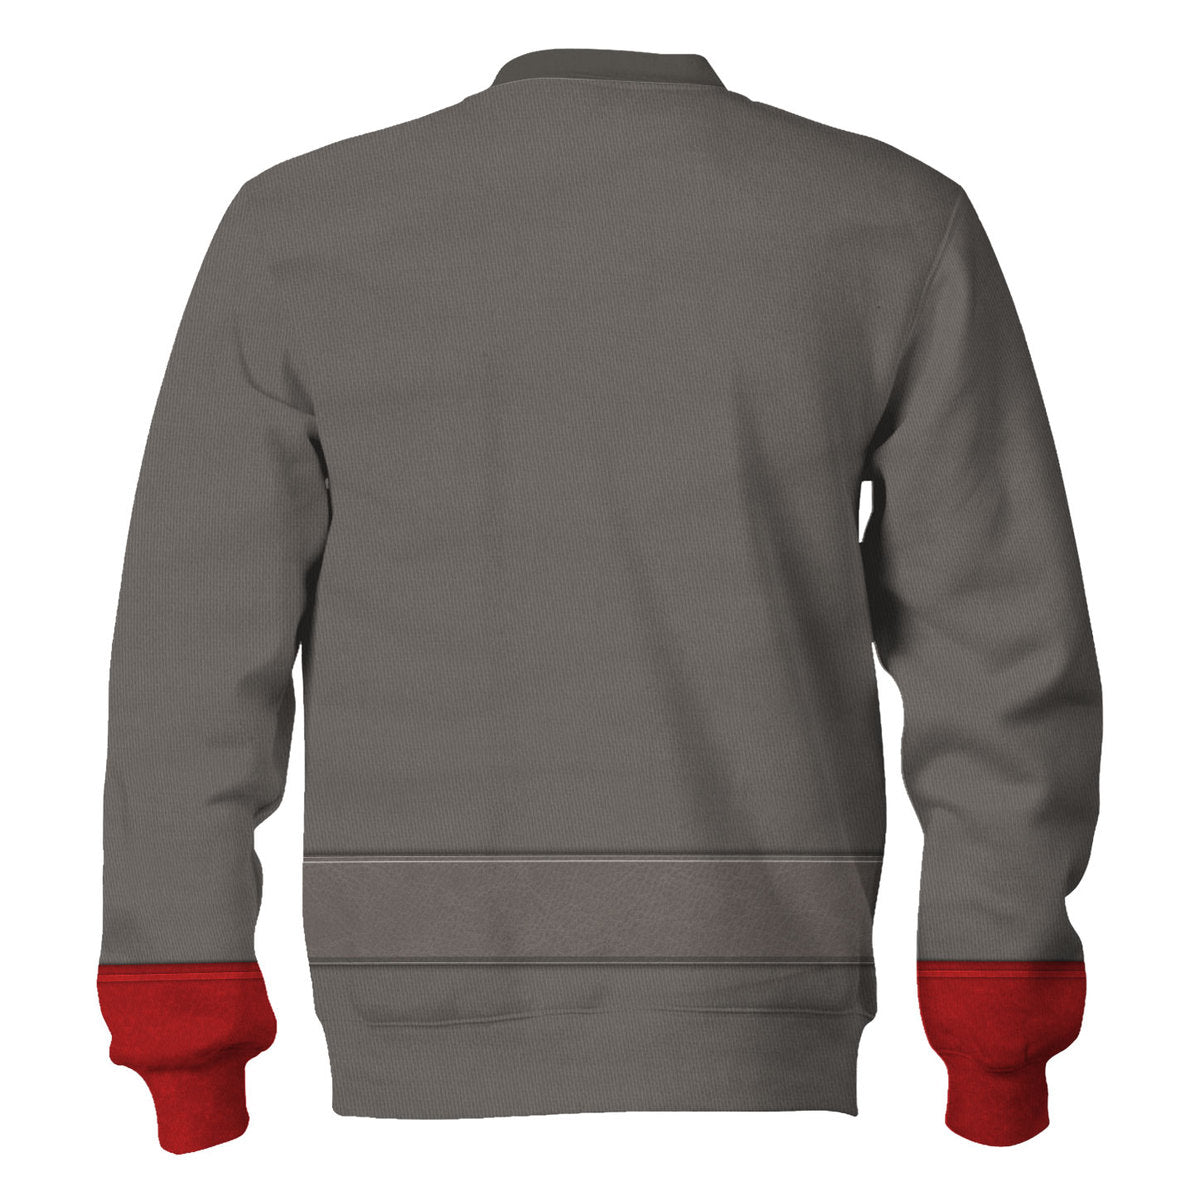 Star Trek Stargate Uniform Cool - Sweater - Ugly Christmas Sweater